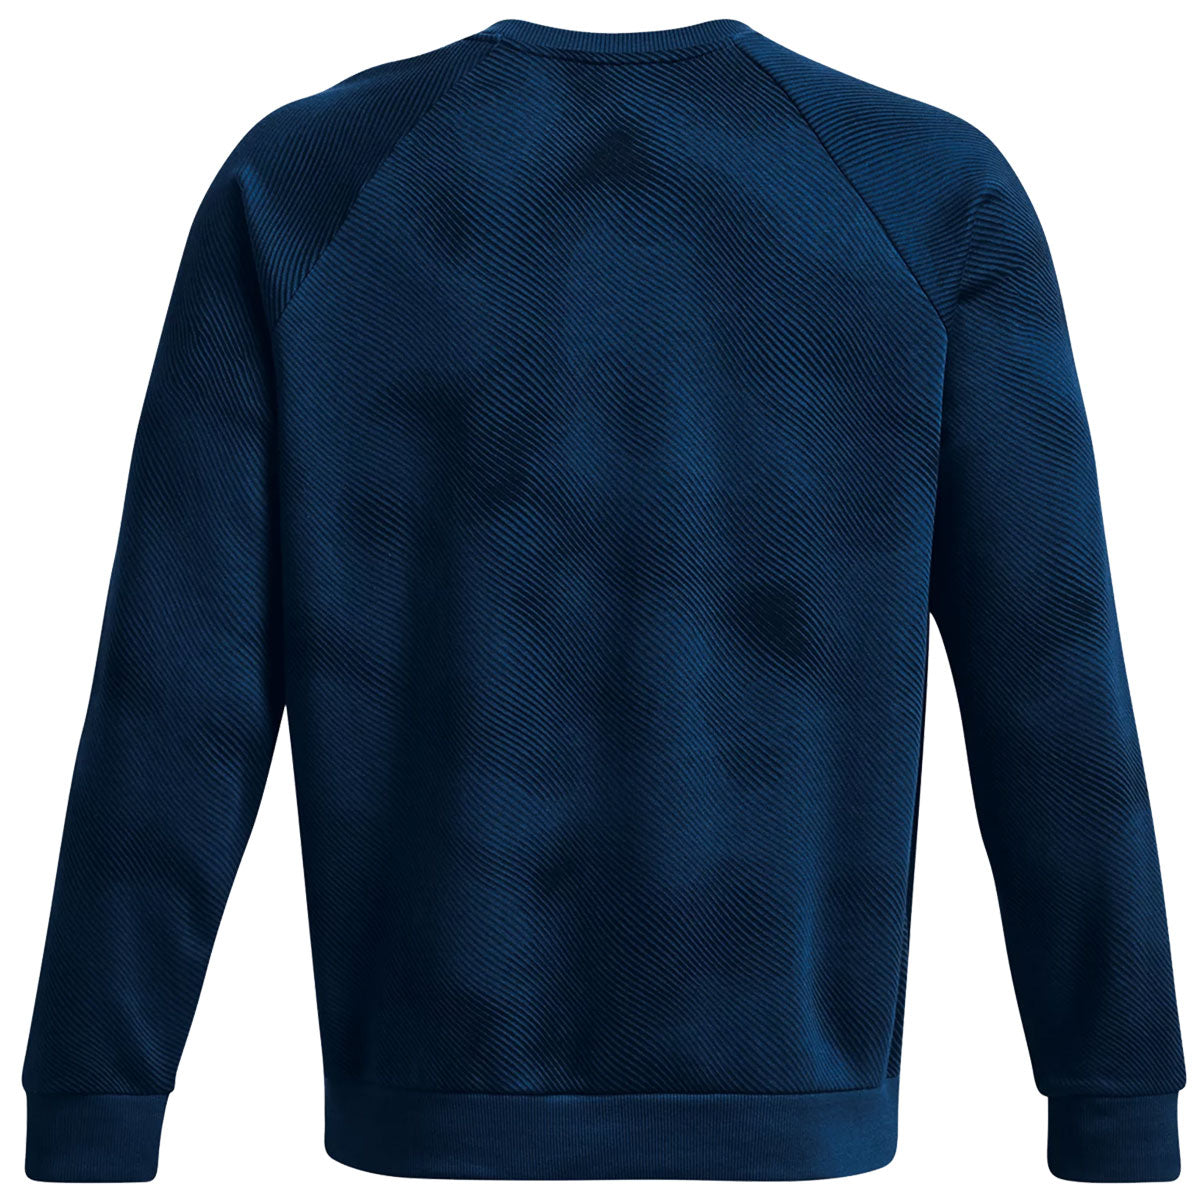 Under Armour Rival Fleece Printed Crew Sweatshirt - Mens - Varsity Blue/White